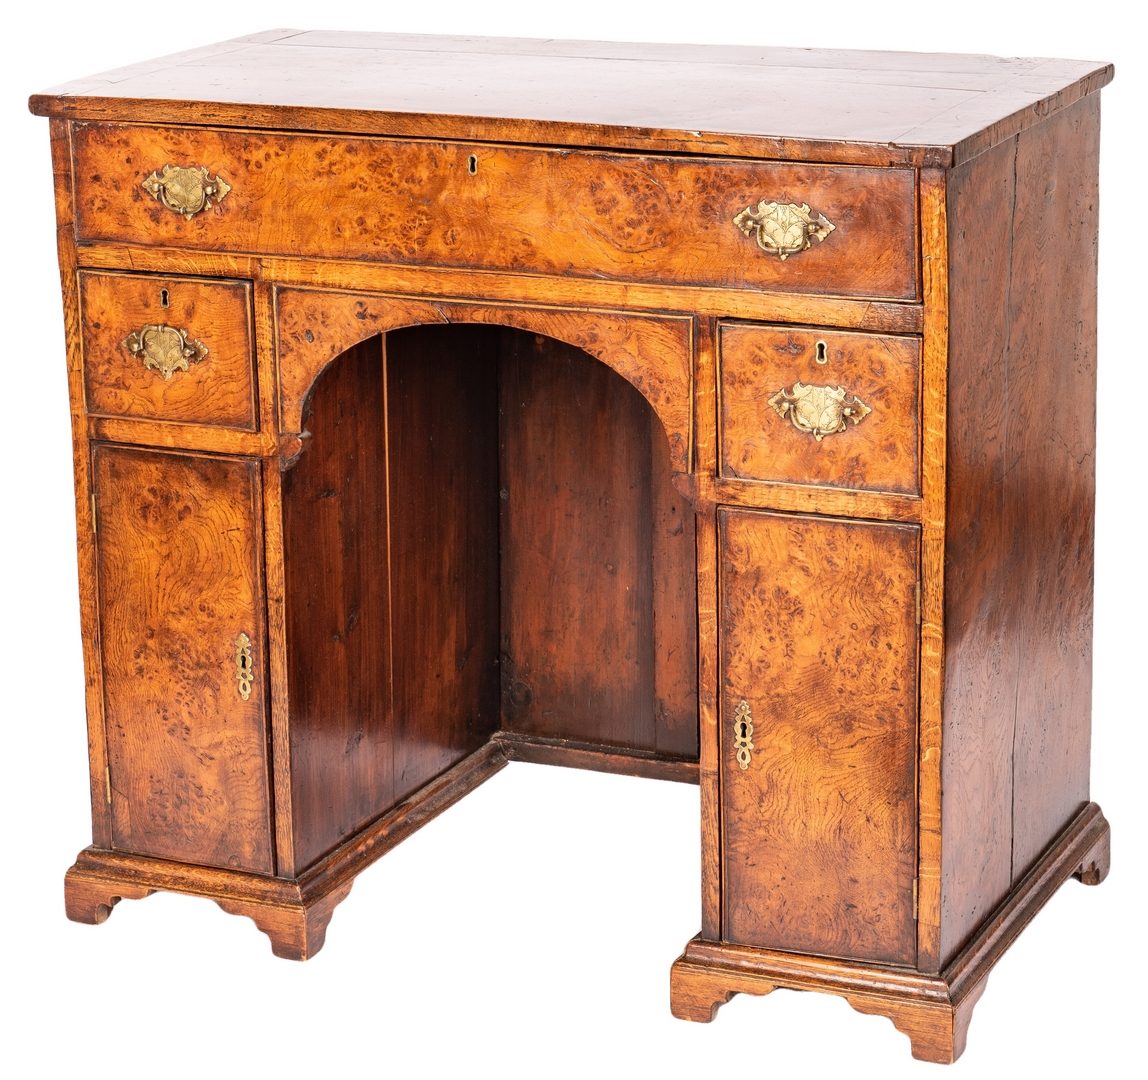 Lot 81: Queen Anne Style Burlwood Desk